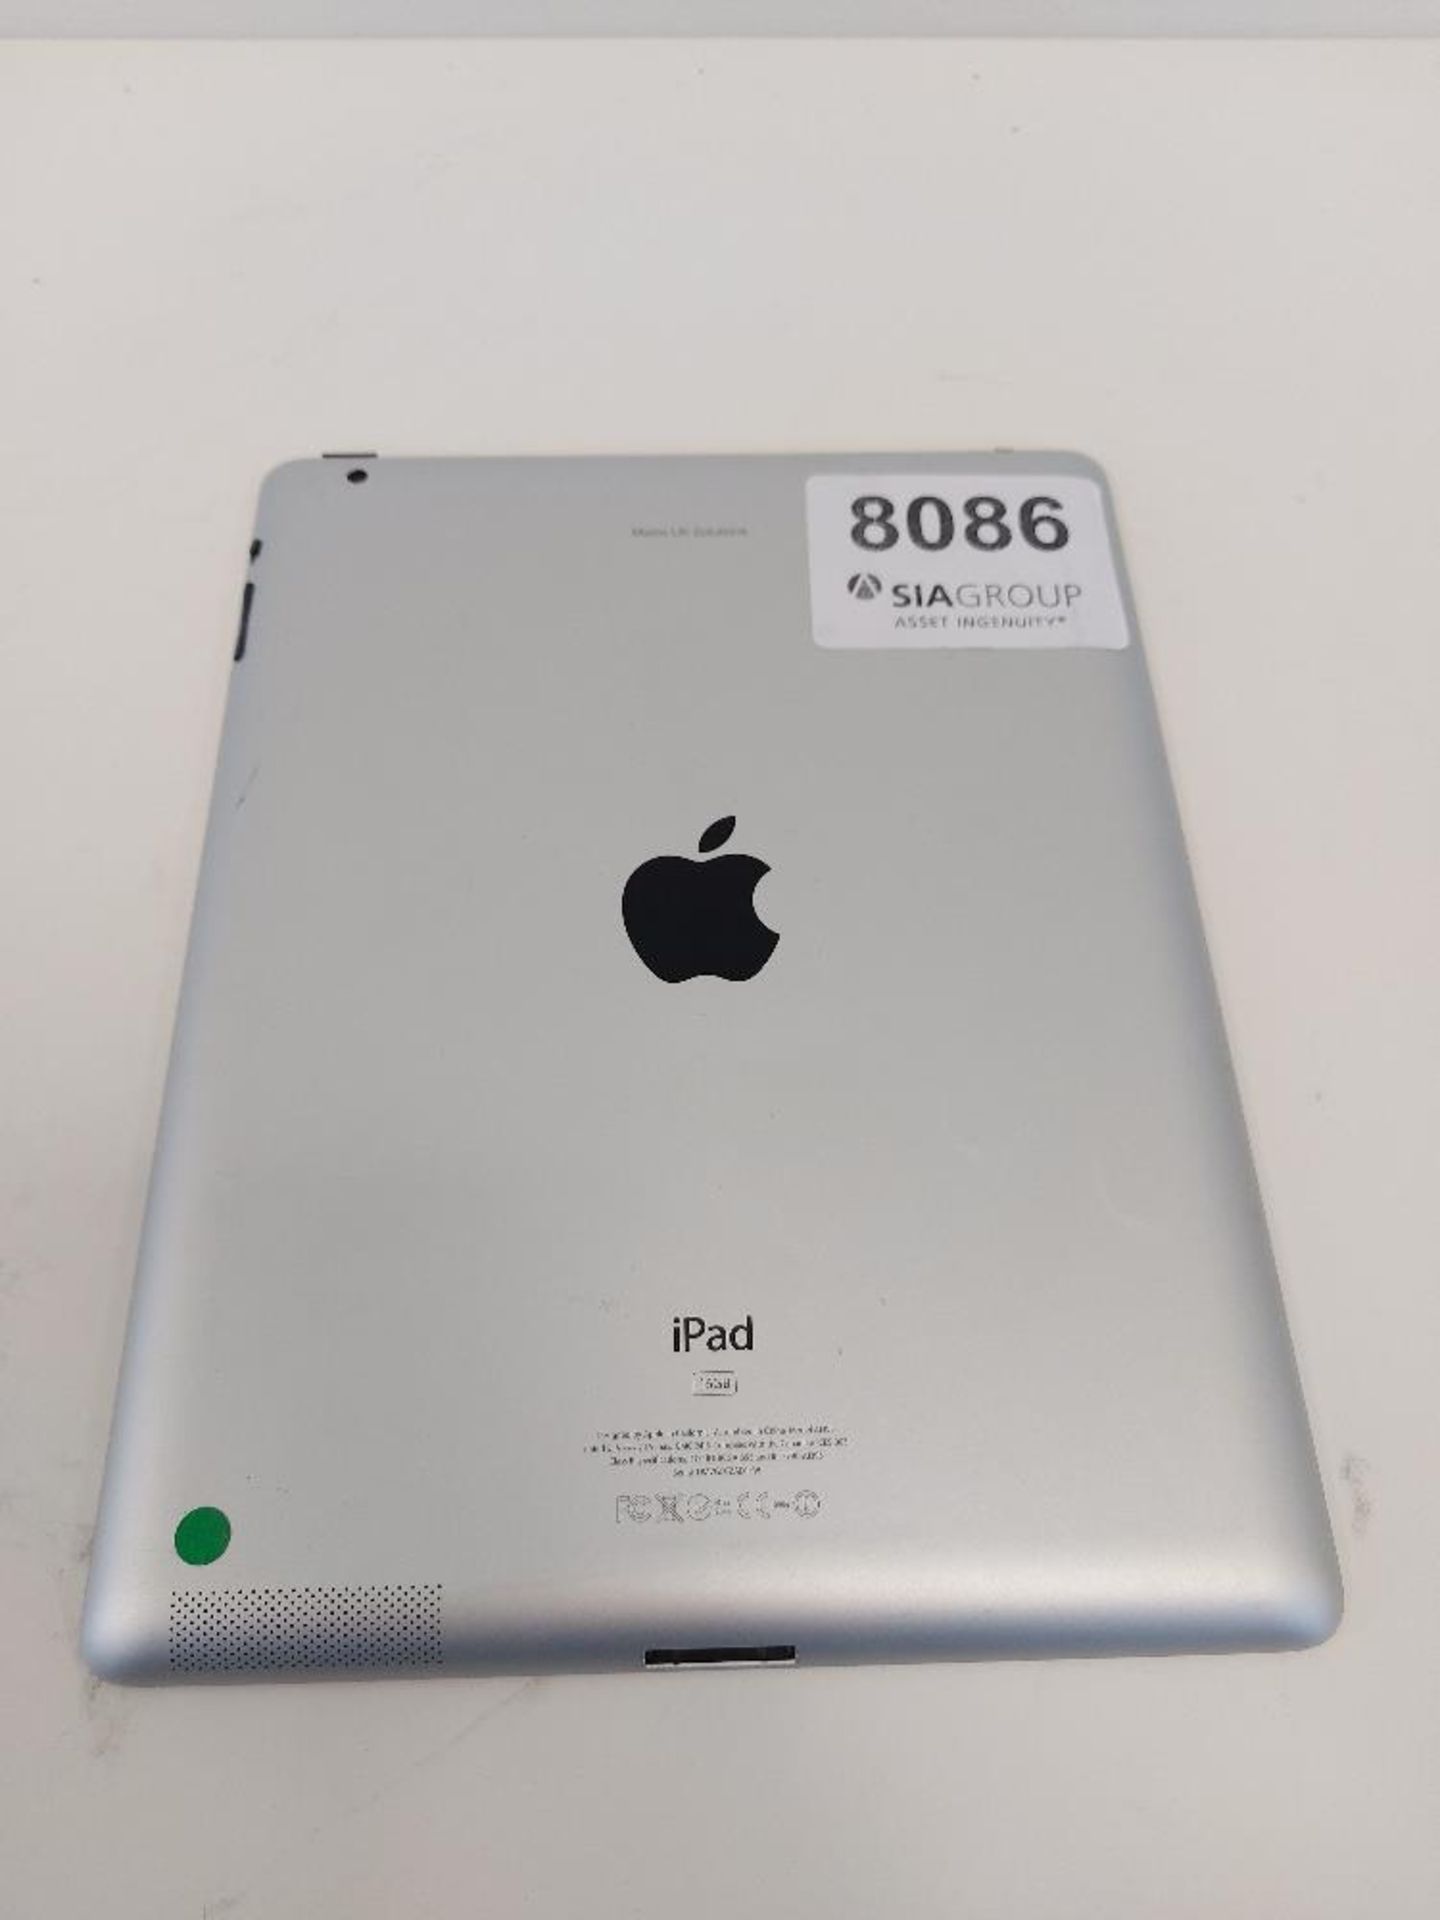 Apple iPad A1395 - Image 2 of 3